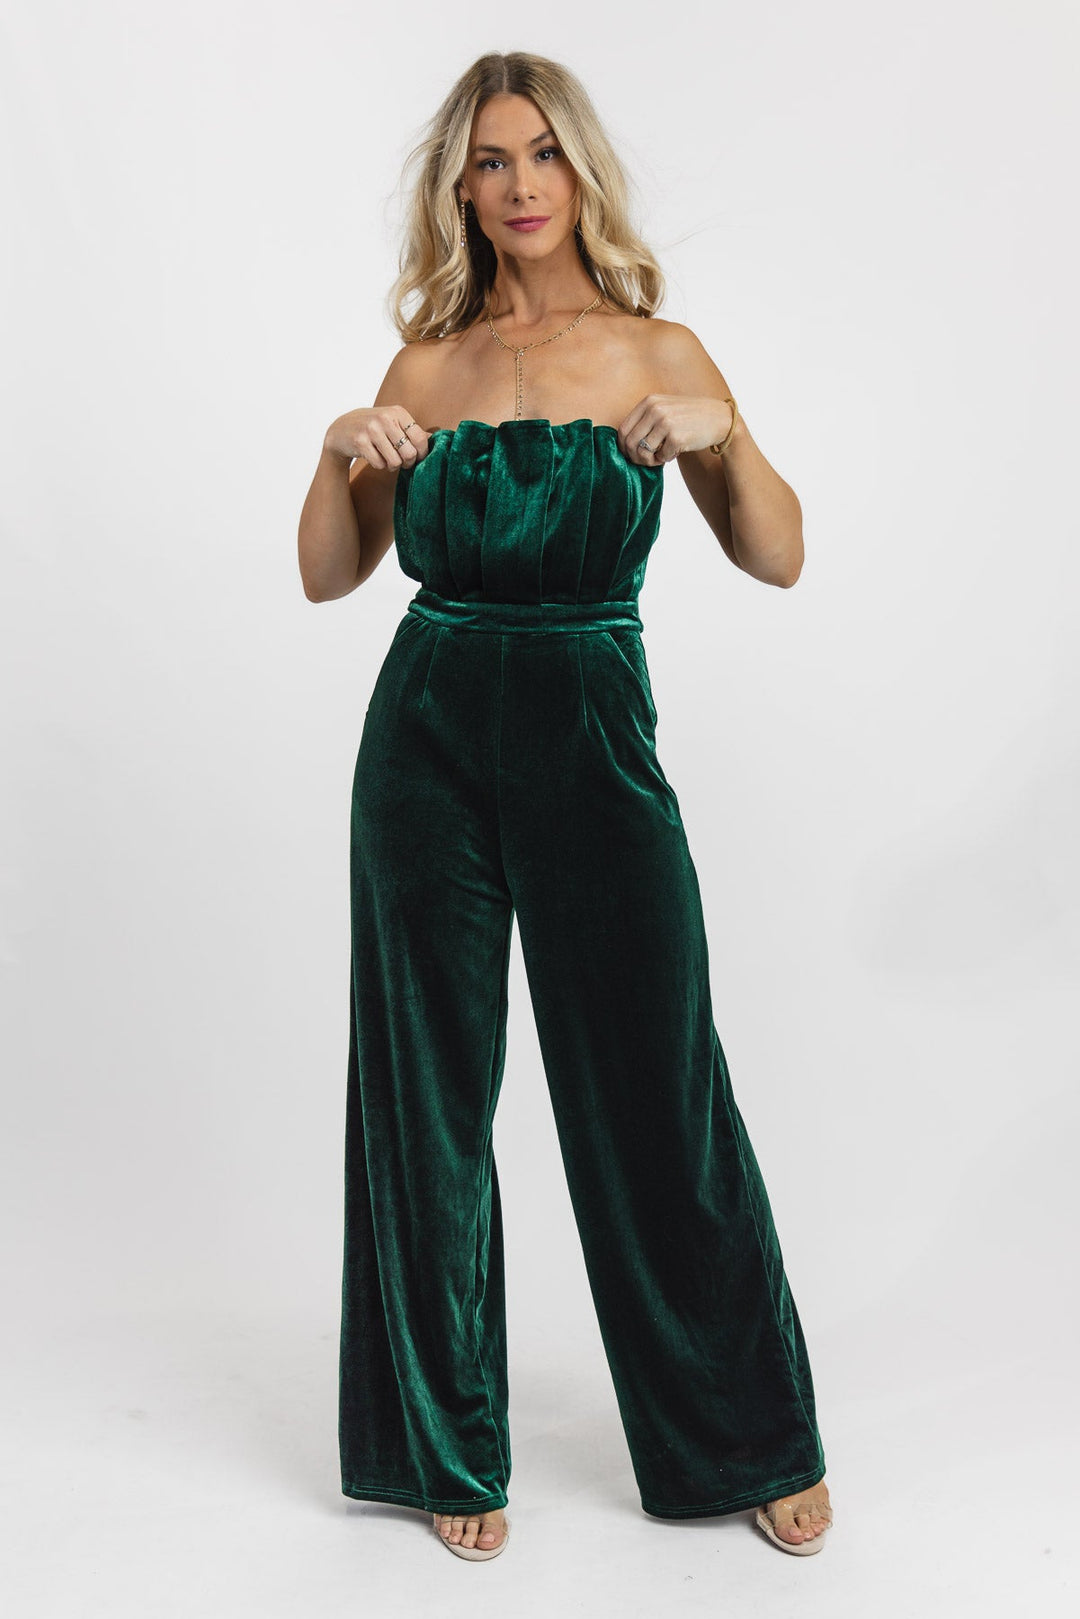 Festive Fling Emerald Velvet Jumpsuit - Final Sale